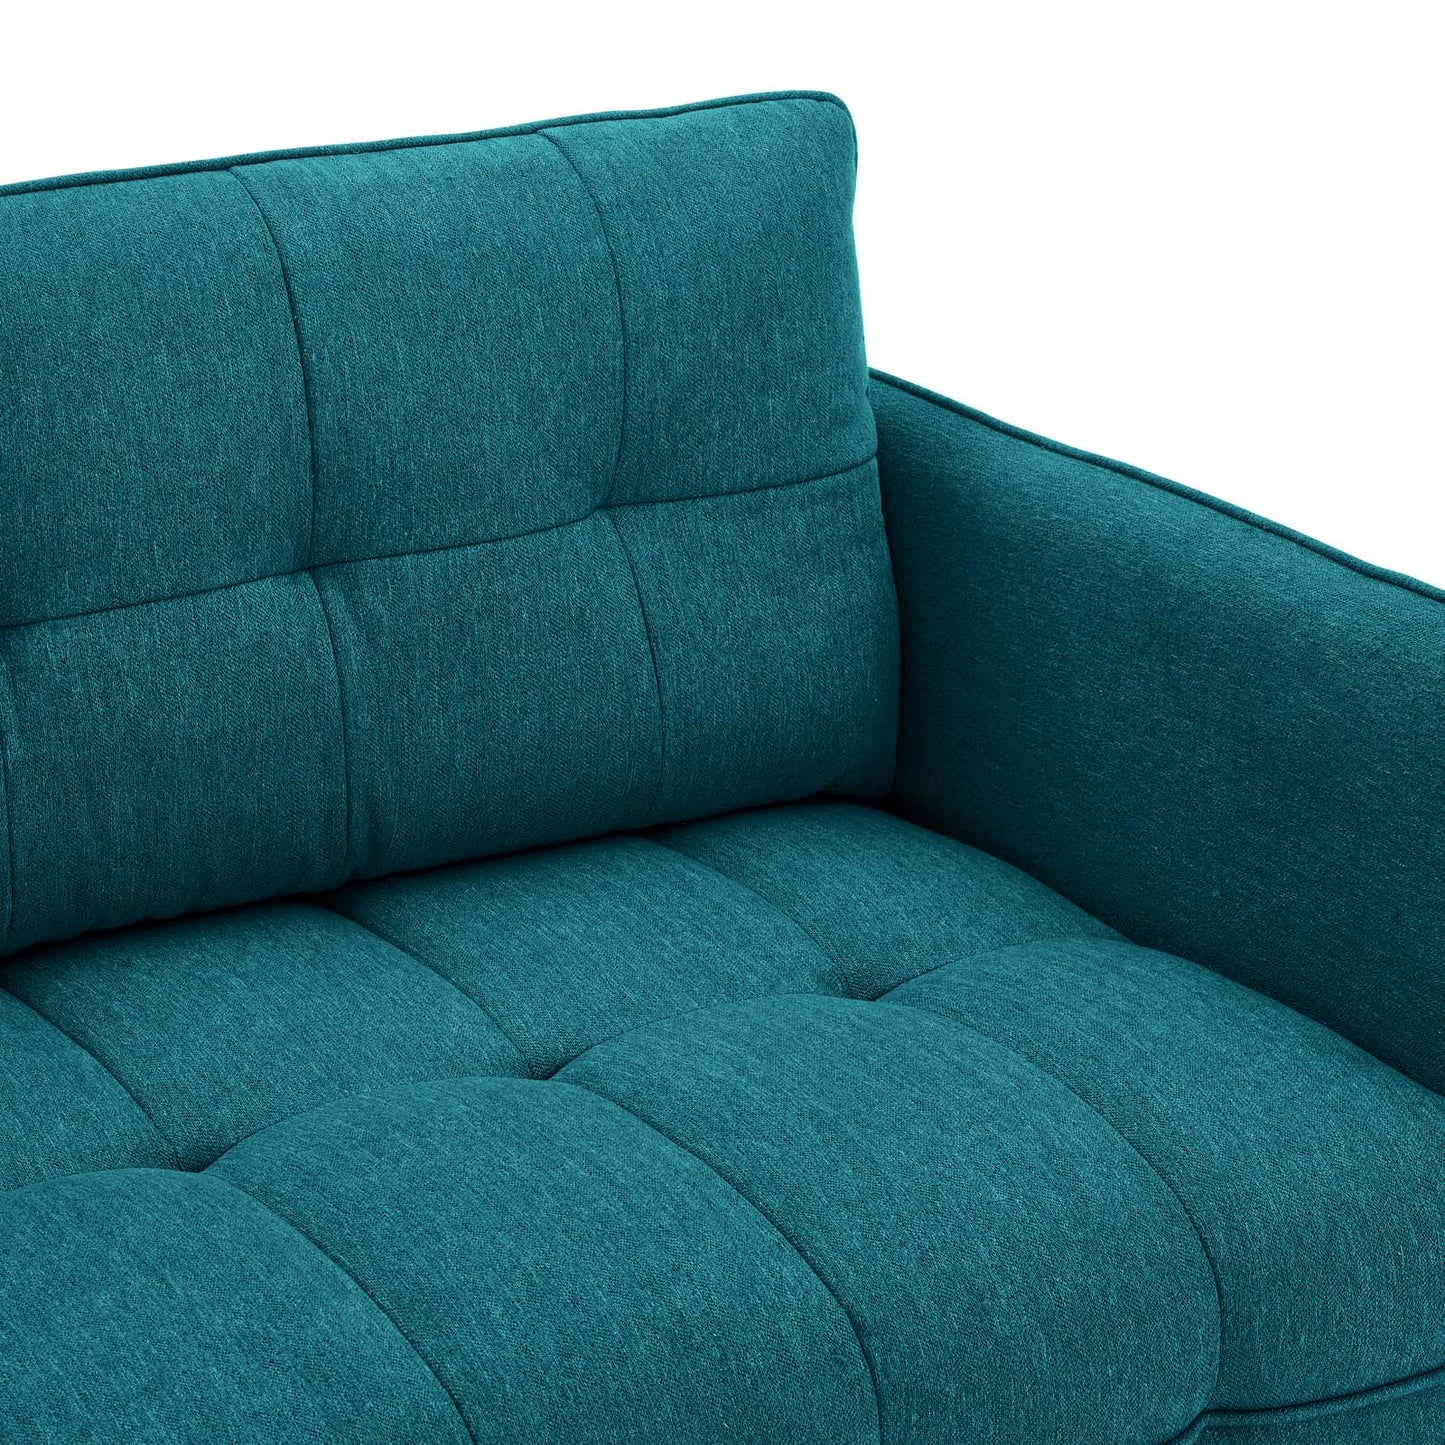 Cameron Tufted Fabric Sofa Teal EEI-4451-TEA